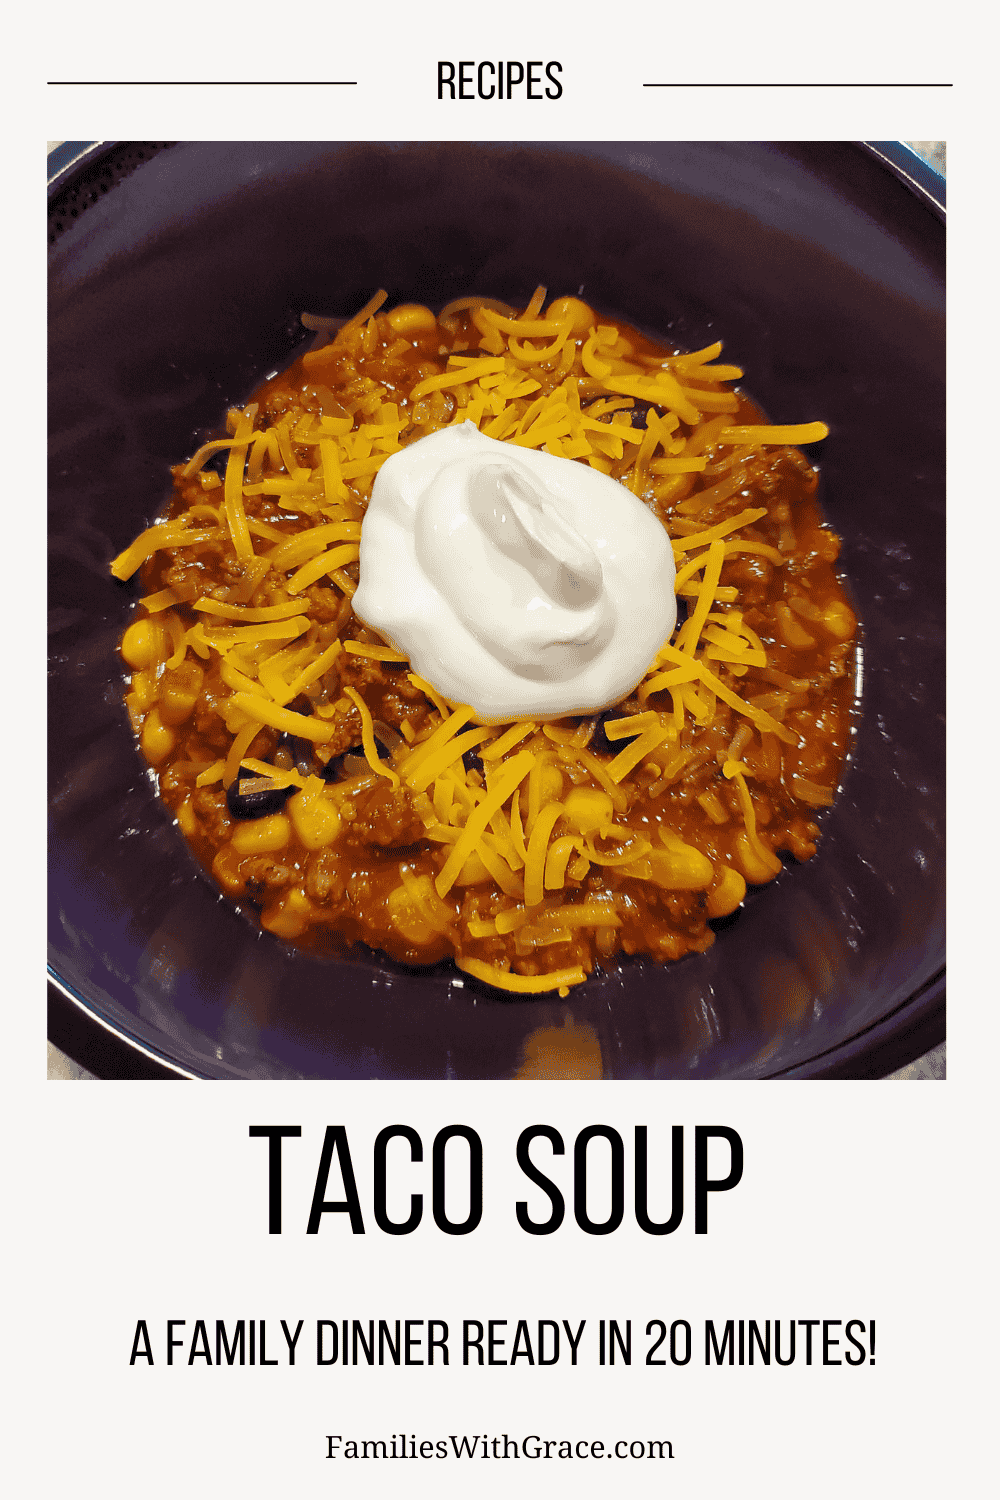 Taco soup recipe